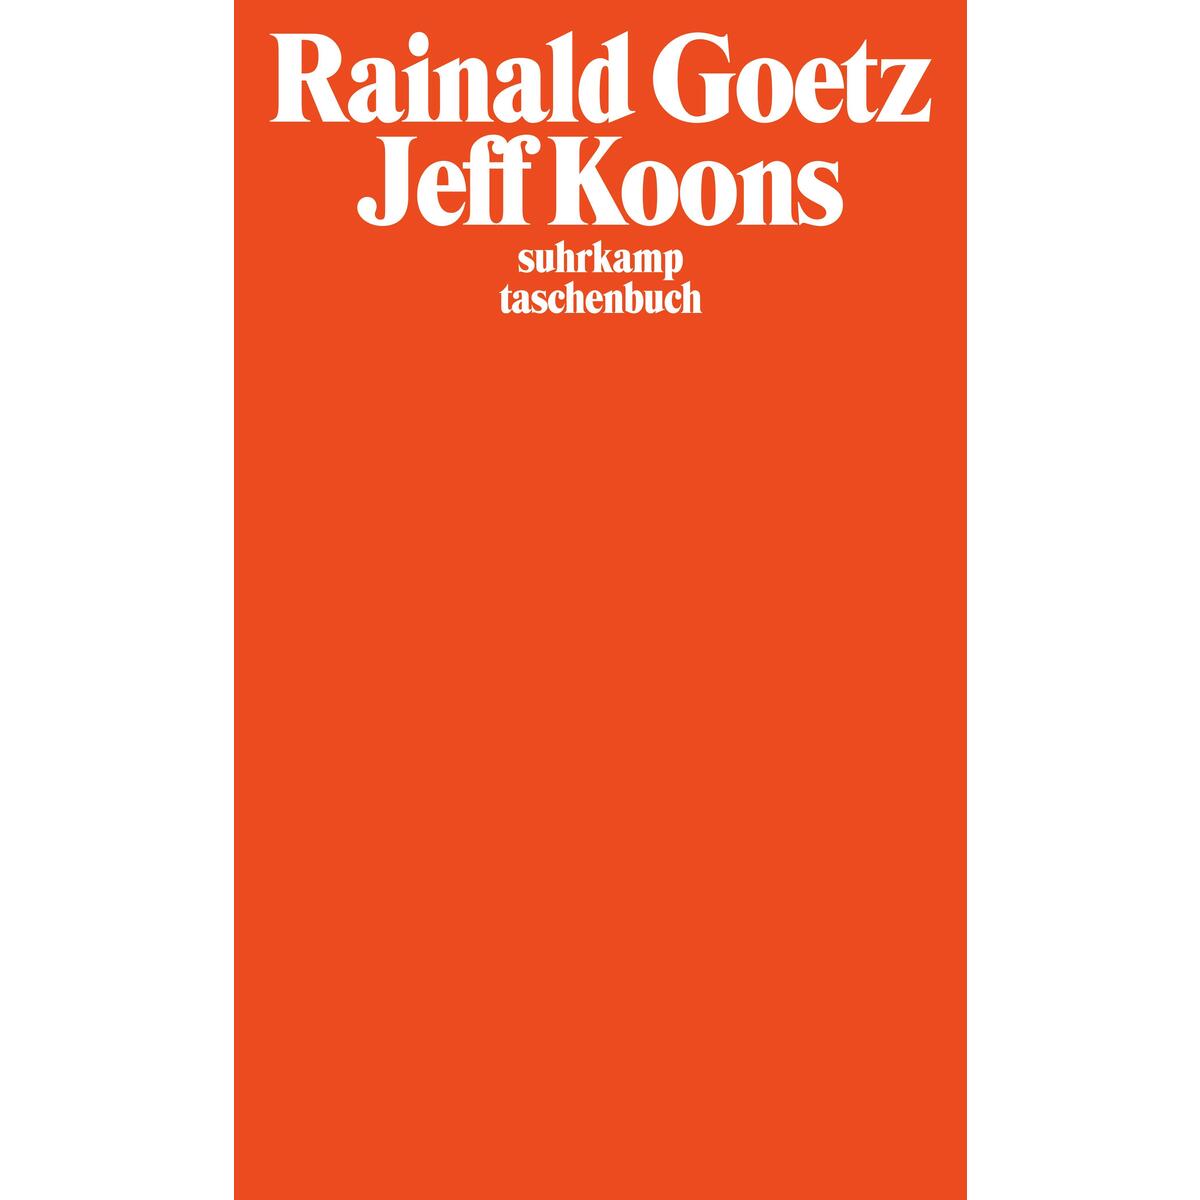 Jeff Koons von Suhrkamp Verlag AG